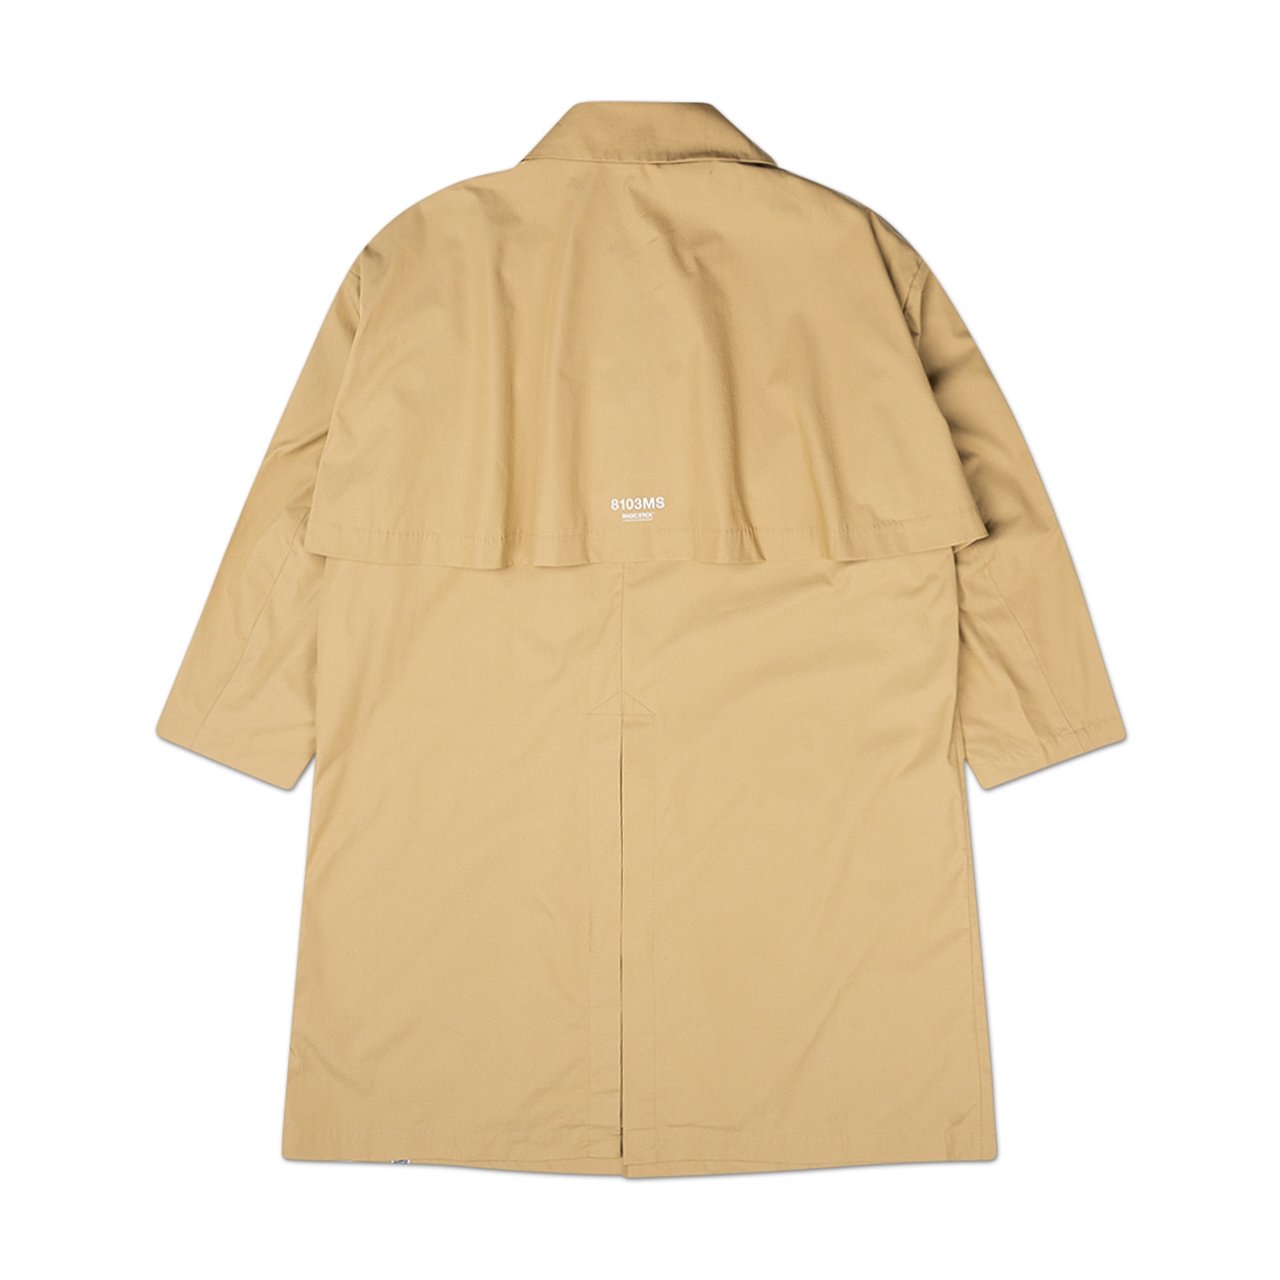 magic stick dick tracy single coat (beige) - 20ss-ms3-025 - a.plus - Image - 2